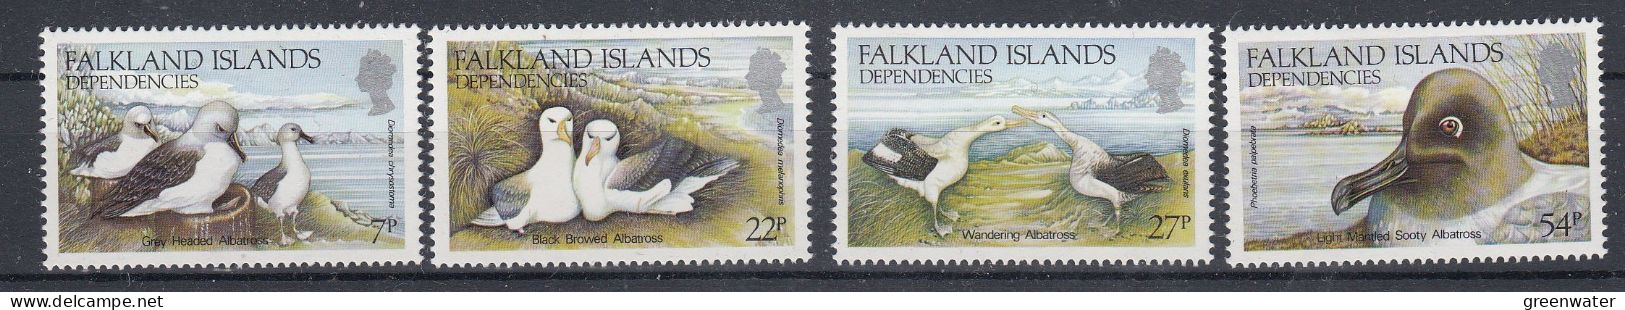 Falkland Islands Dependencies (FID) 1985 Albatross 4v ** Mnh  (59823A) - South Georgia